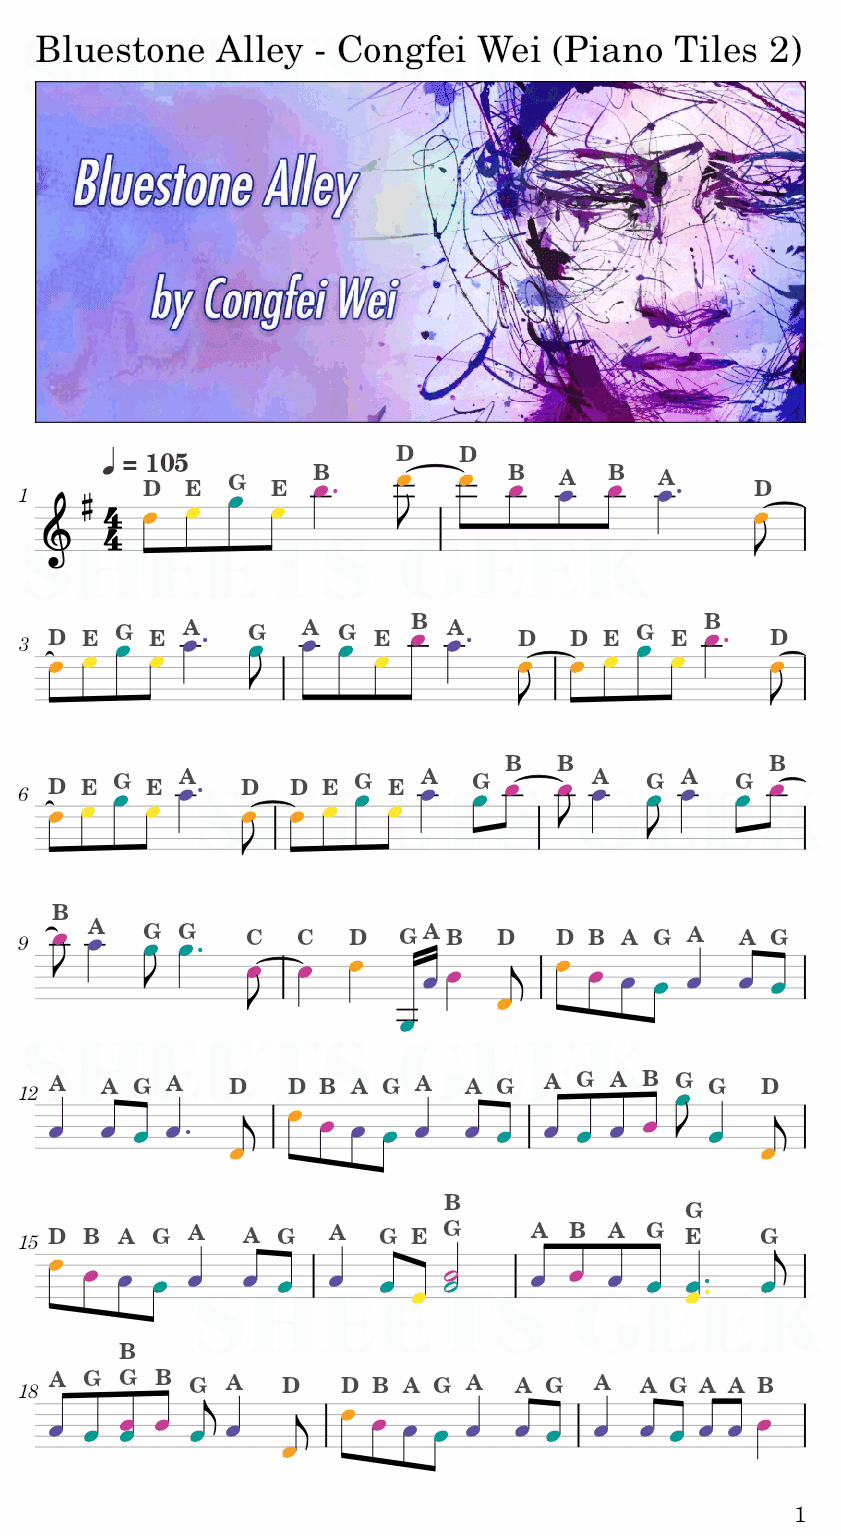 Bluestone Alley - Congfei Wei (Piano Tiles 2) Easy Sheet Music Free for piano, keyboard, flute, violin, sax, cello page 1